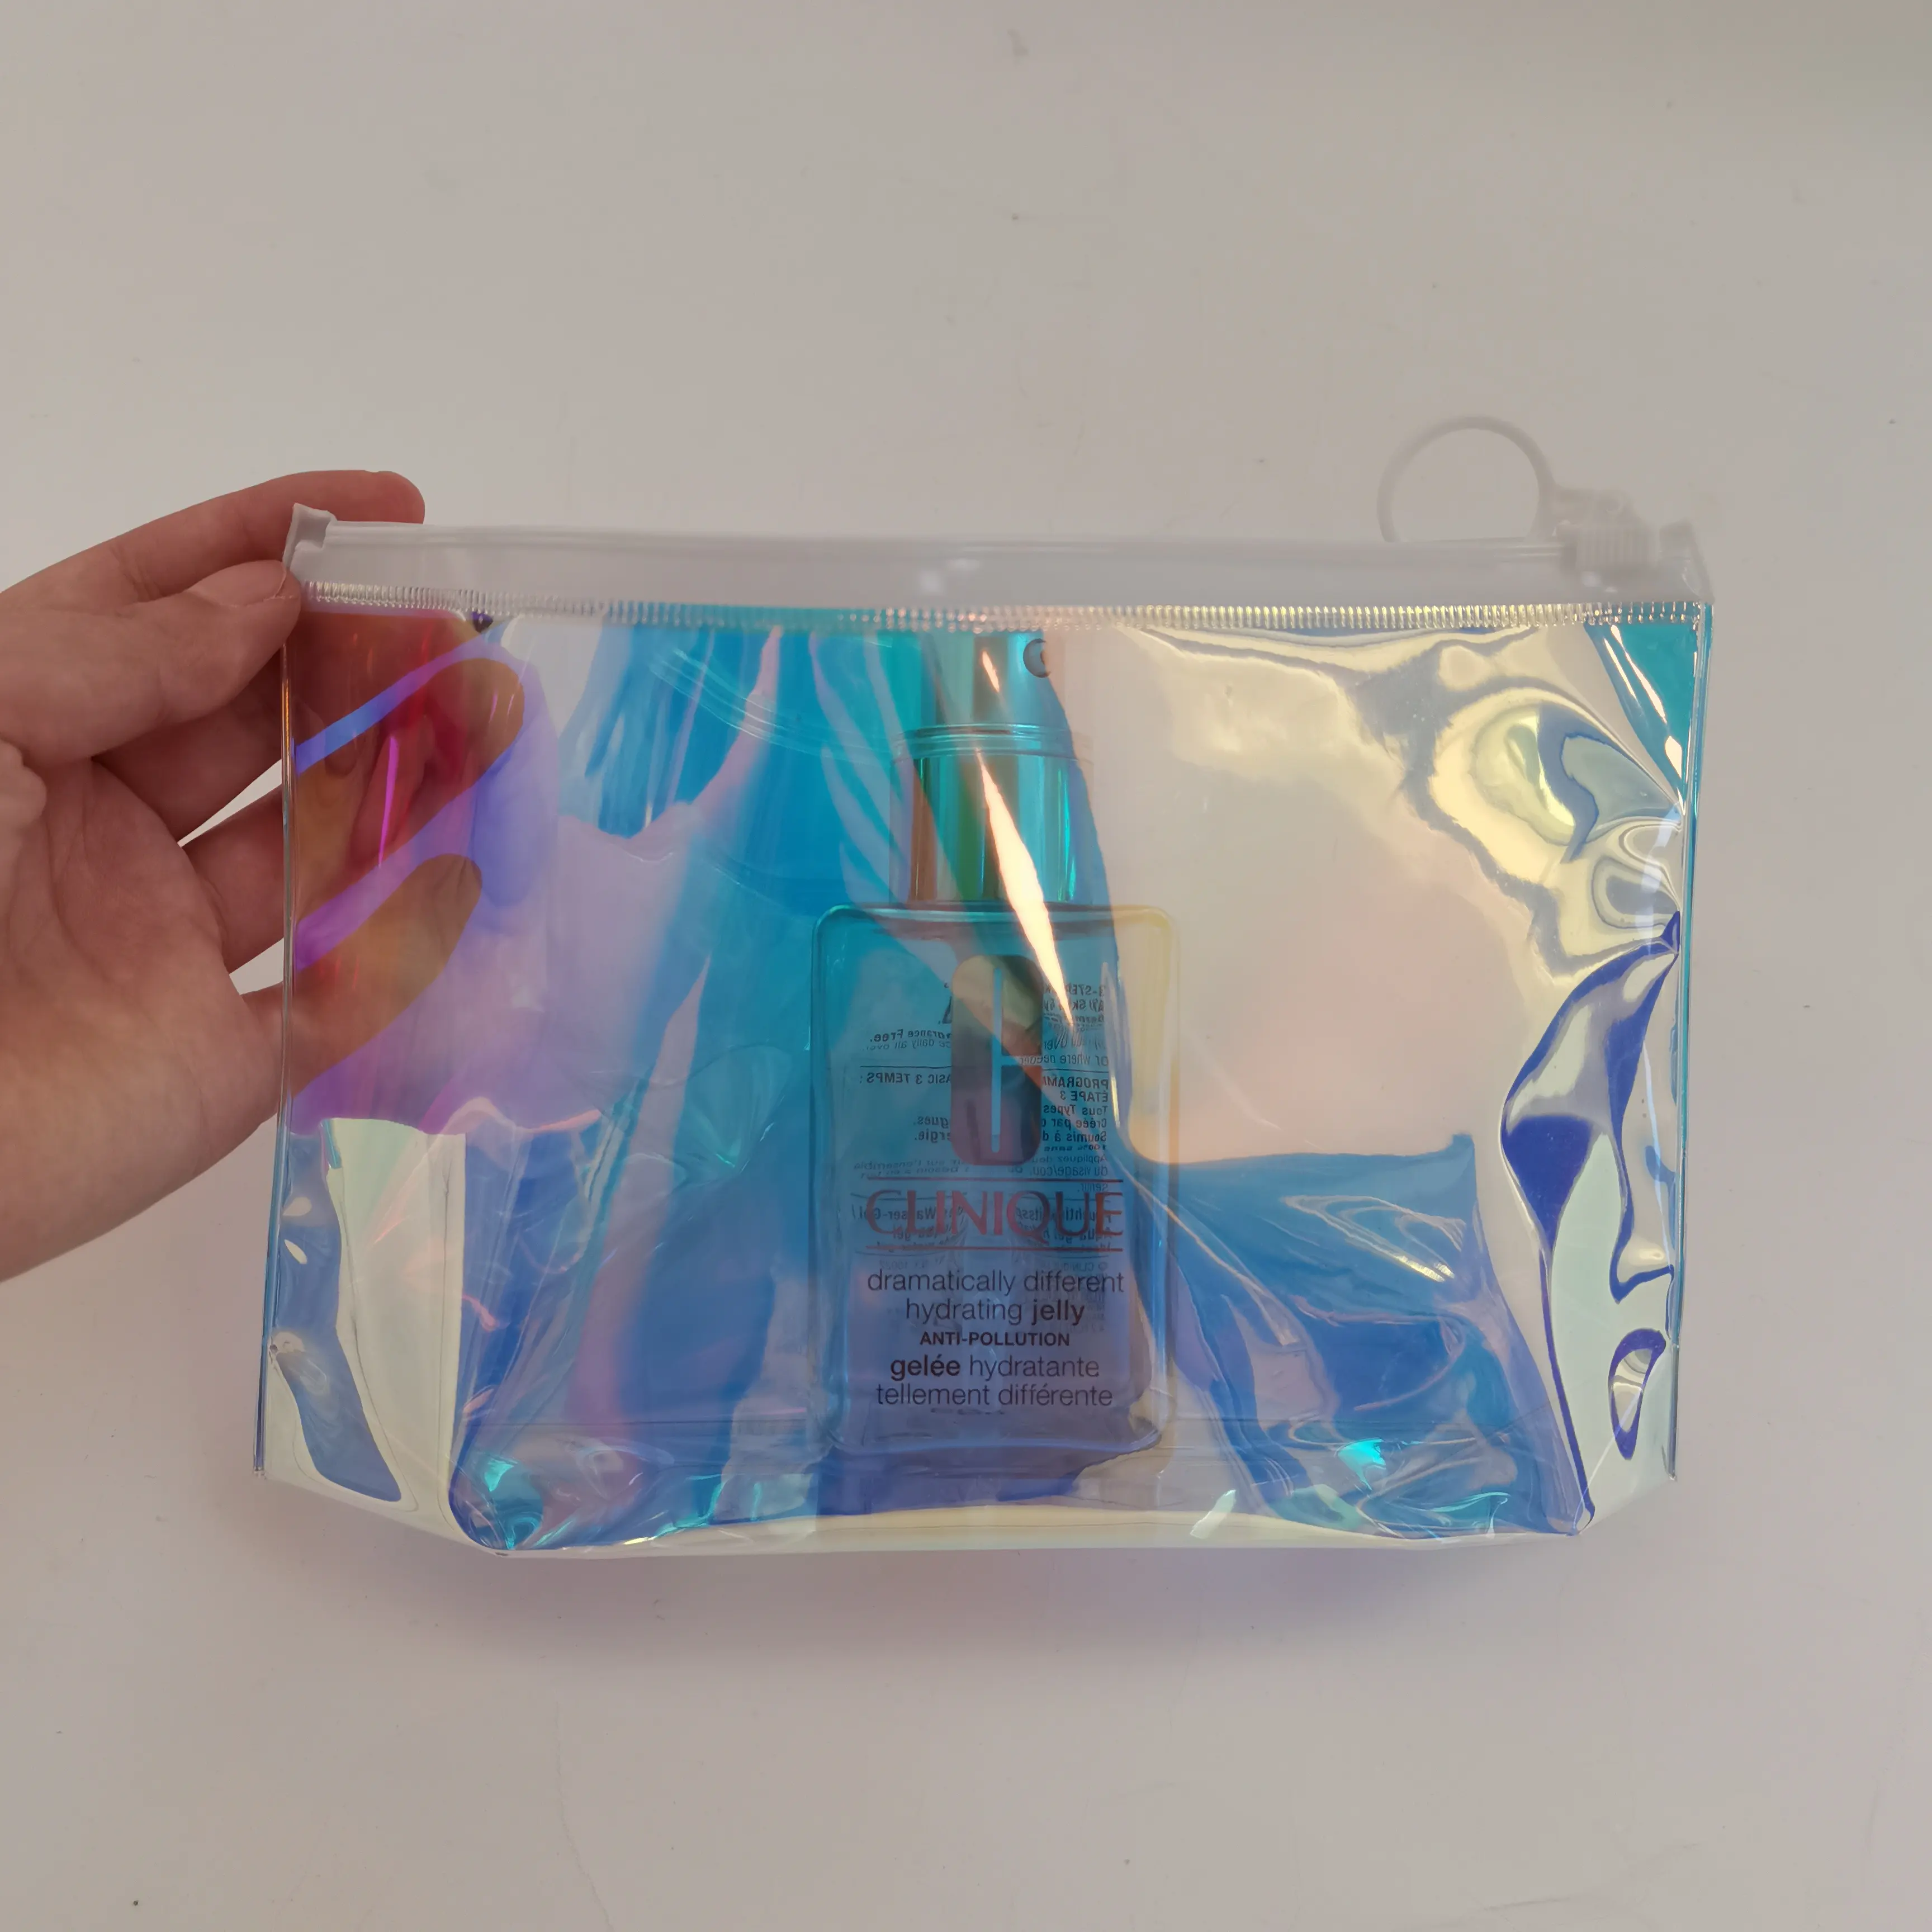 Laser PVC Holographic Cosmetic Bag Shiny Iridescent Travel Makeup bag For Girls Zipper Bag